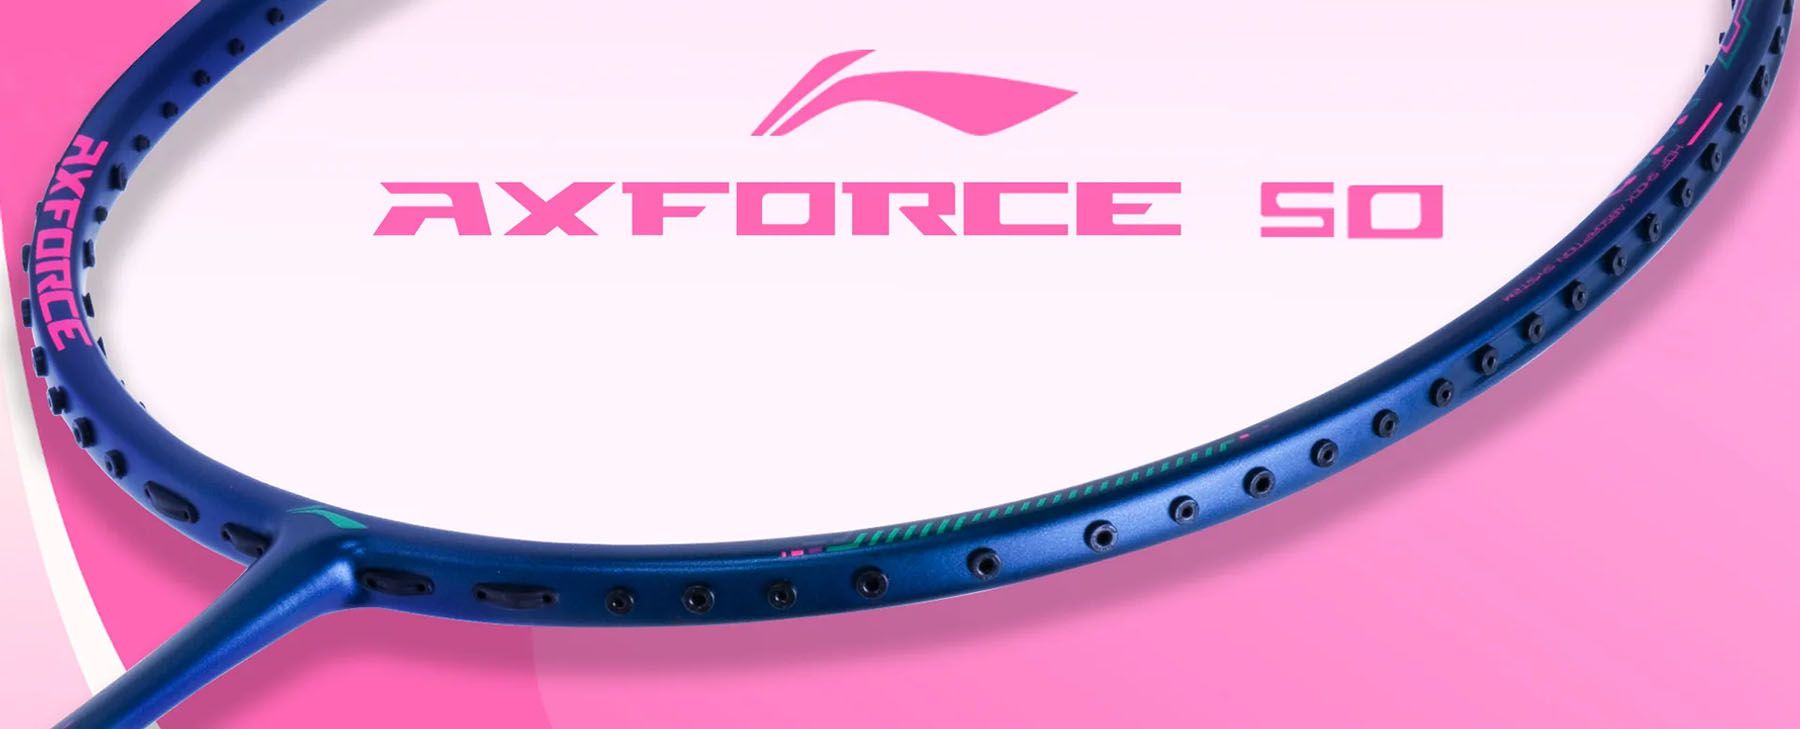 axforce 50 racket banner